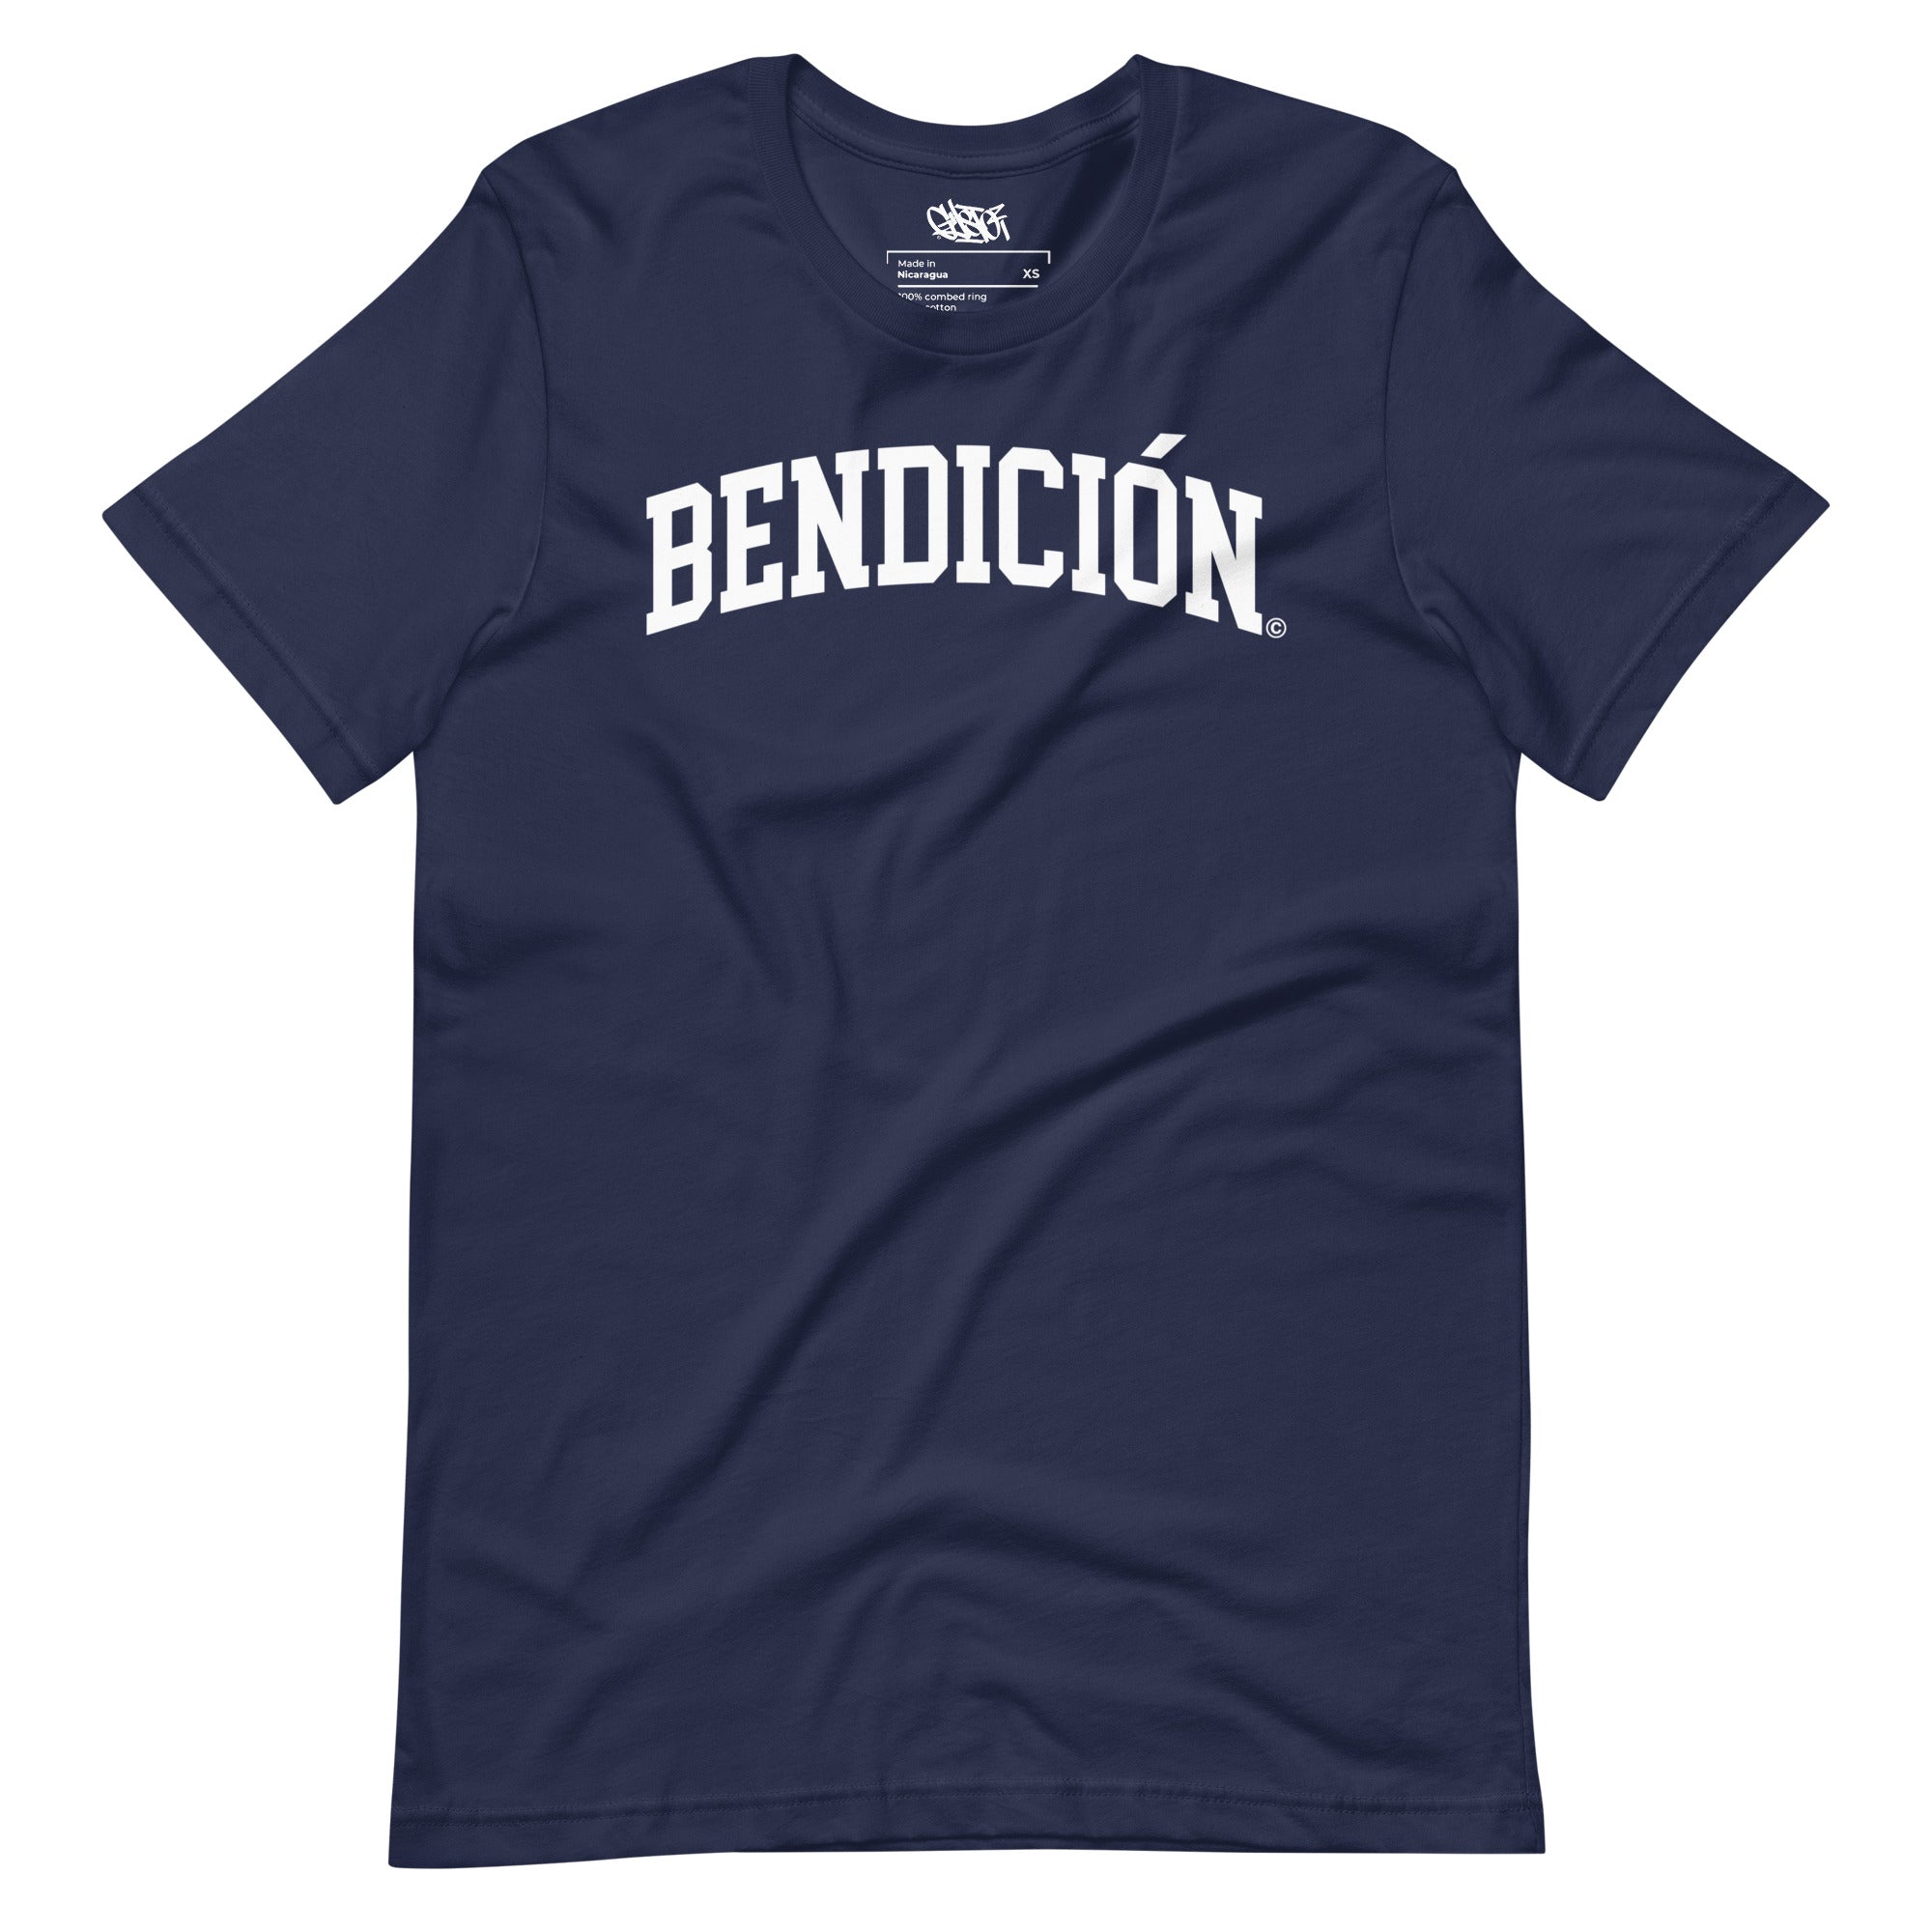 Bendicion - Unisex T-Shirt